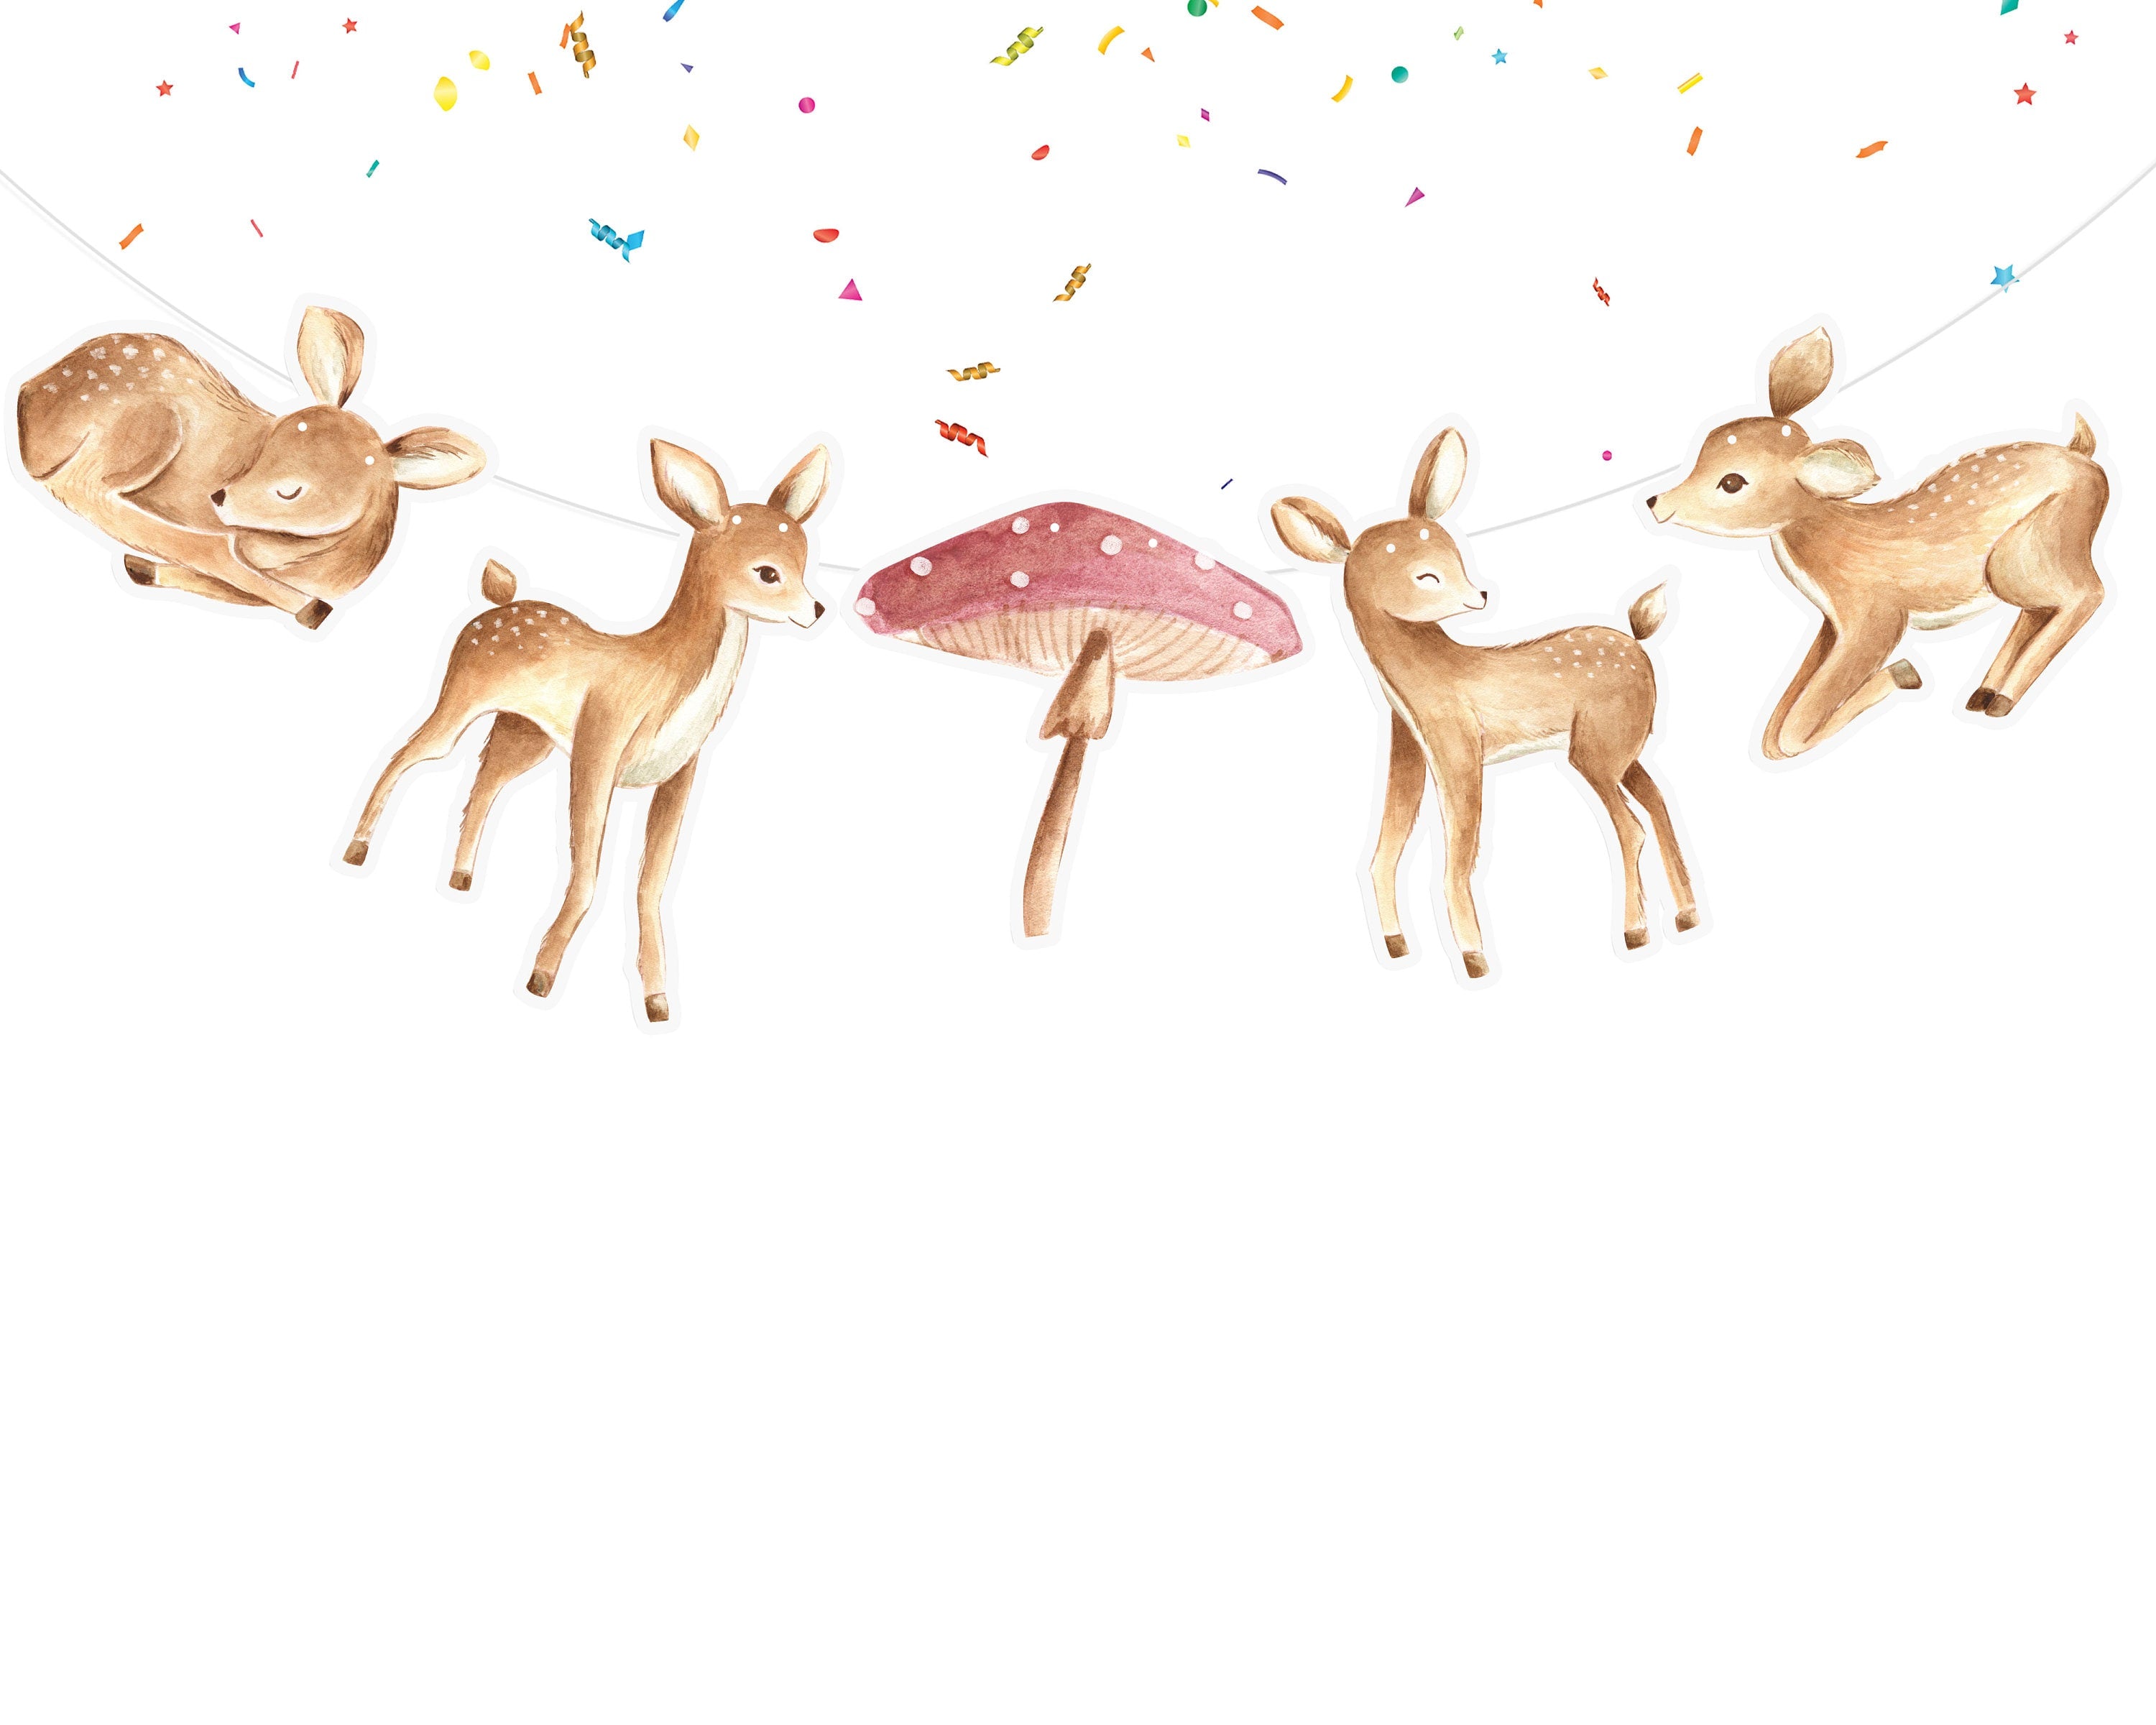 Enchanted Woodland Deer Cartoon Banner - Gentle Forest Decor for Children's Spaces